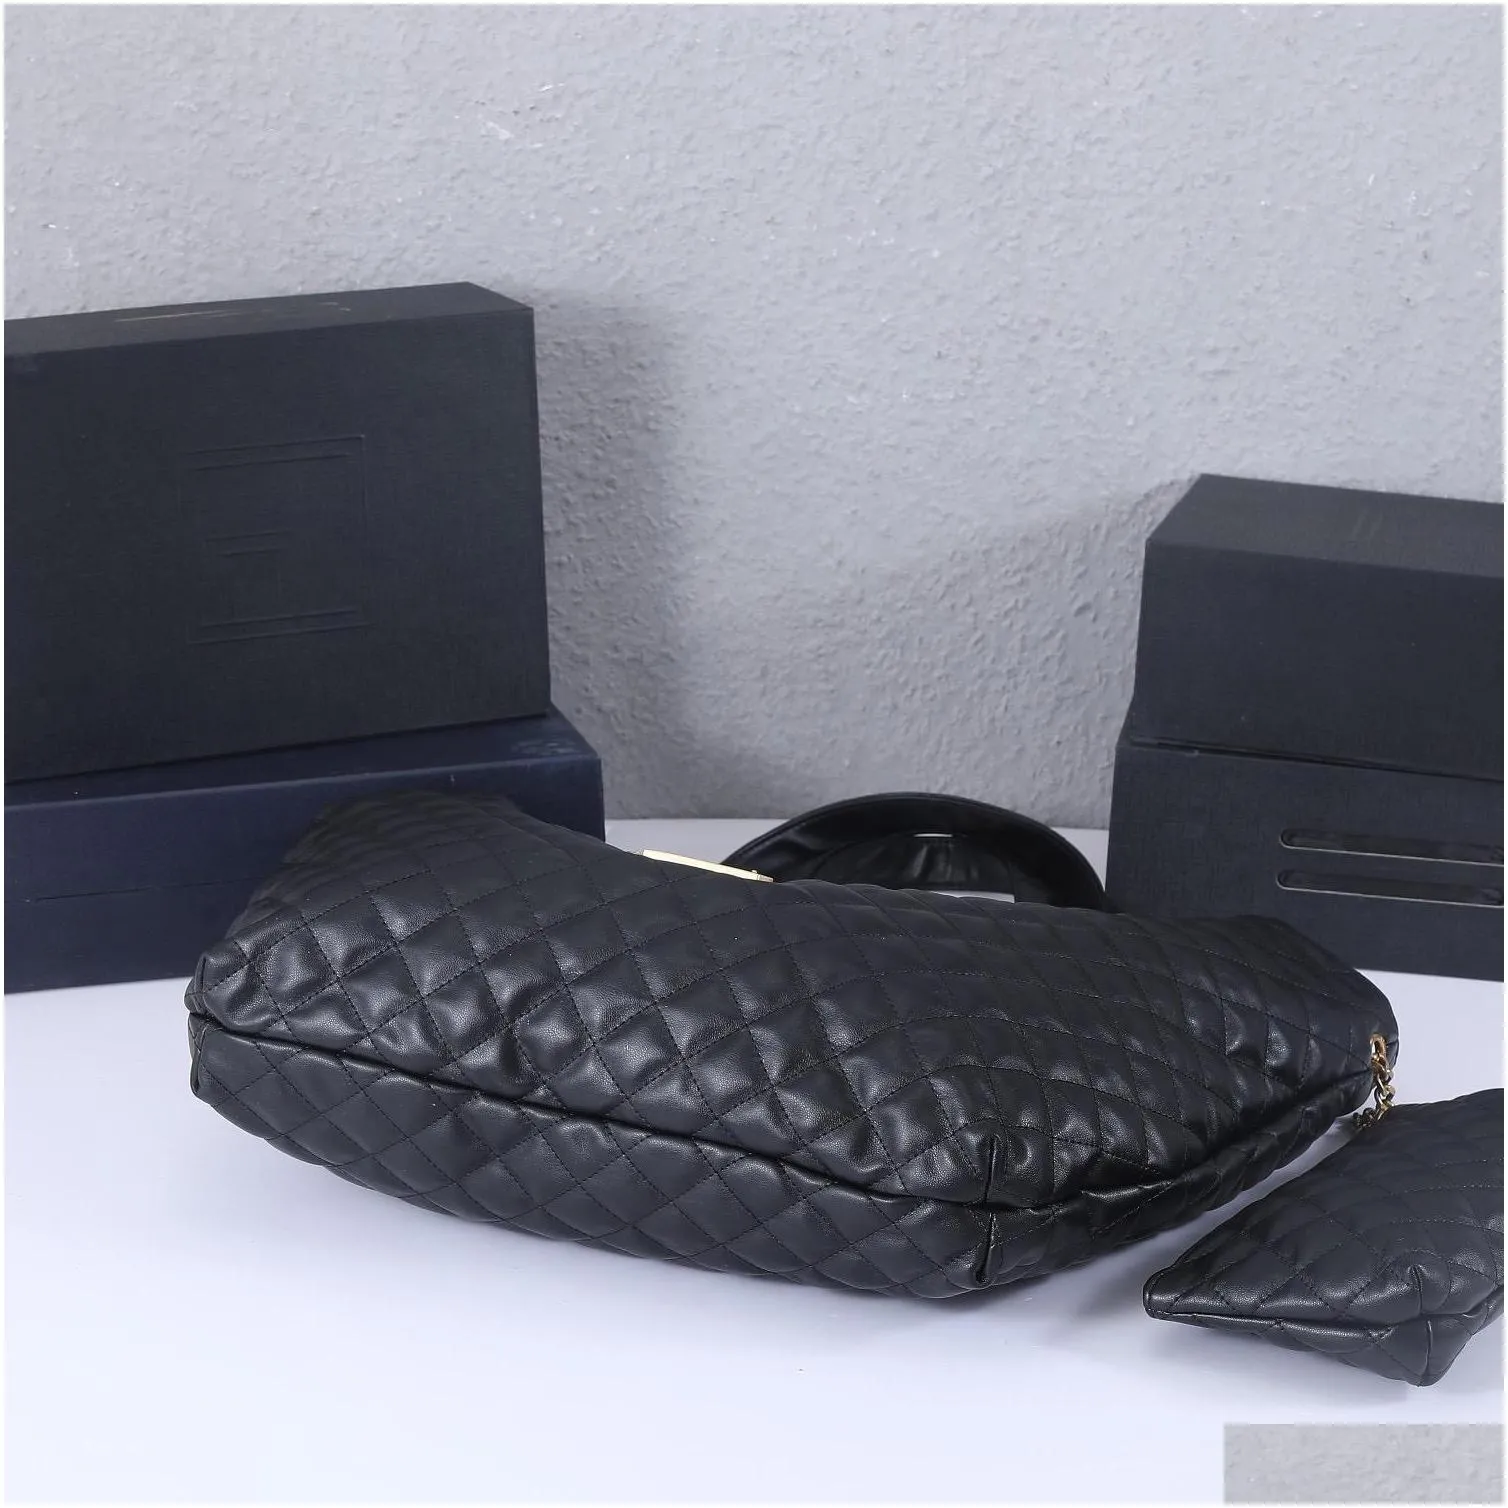 icare large women leather tote black beige plaid lady handbag thread diamond lattice shopping bags